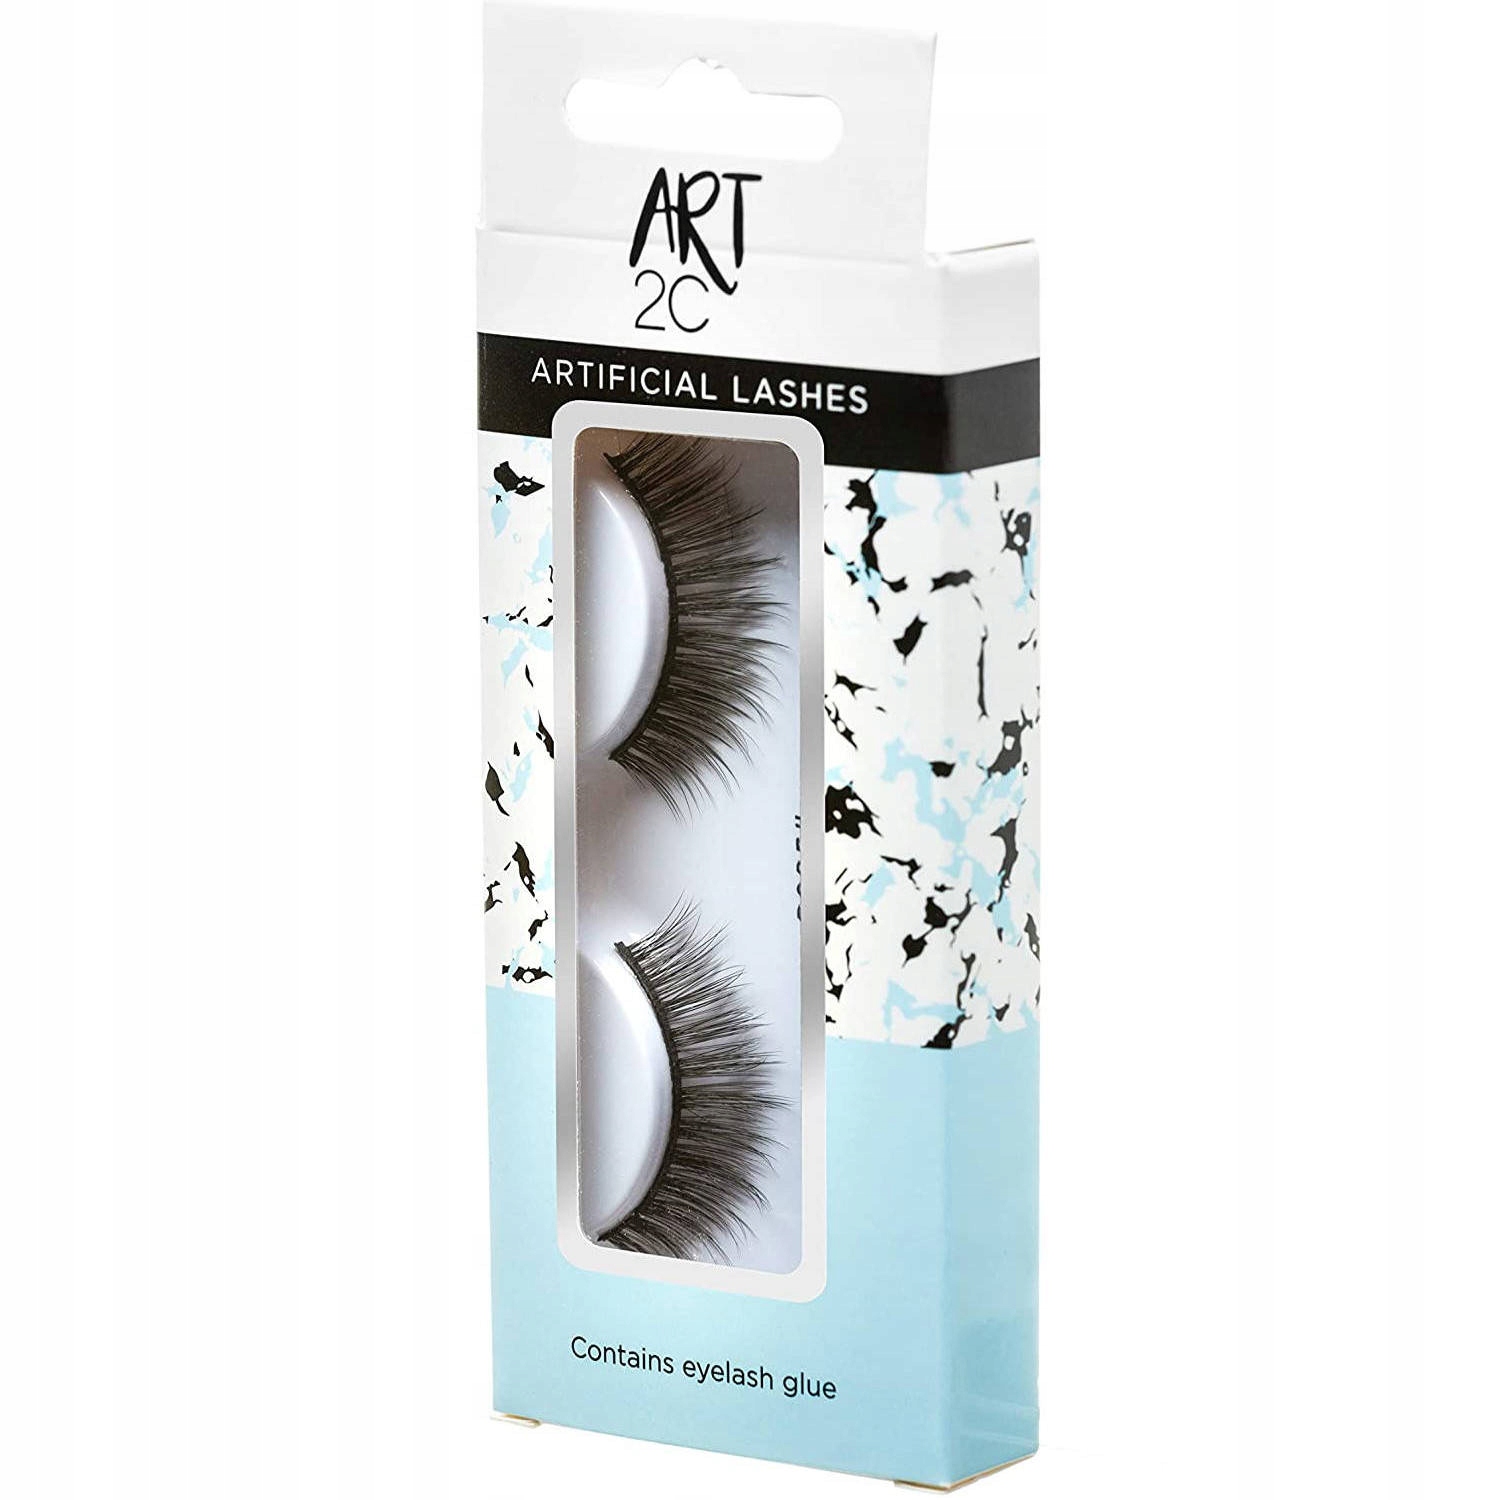 Art 2C Artificial Reusable Fake Eyelashes S025 RRP £2.50 CLEARANCE XL £1.99